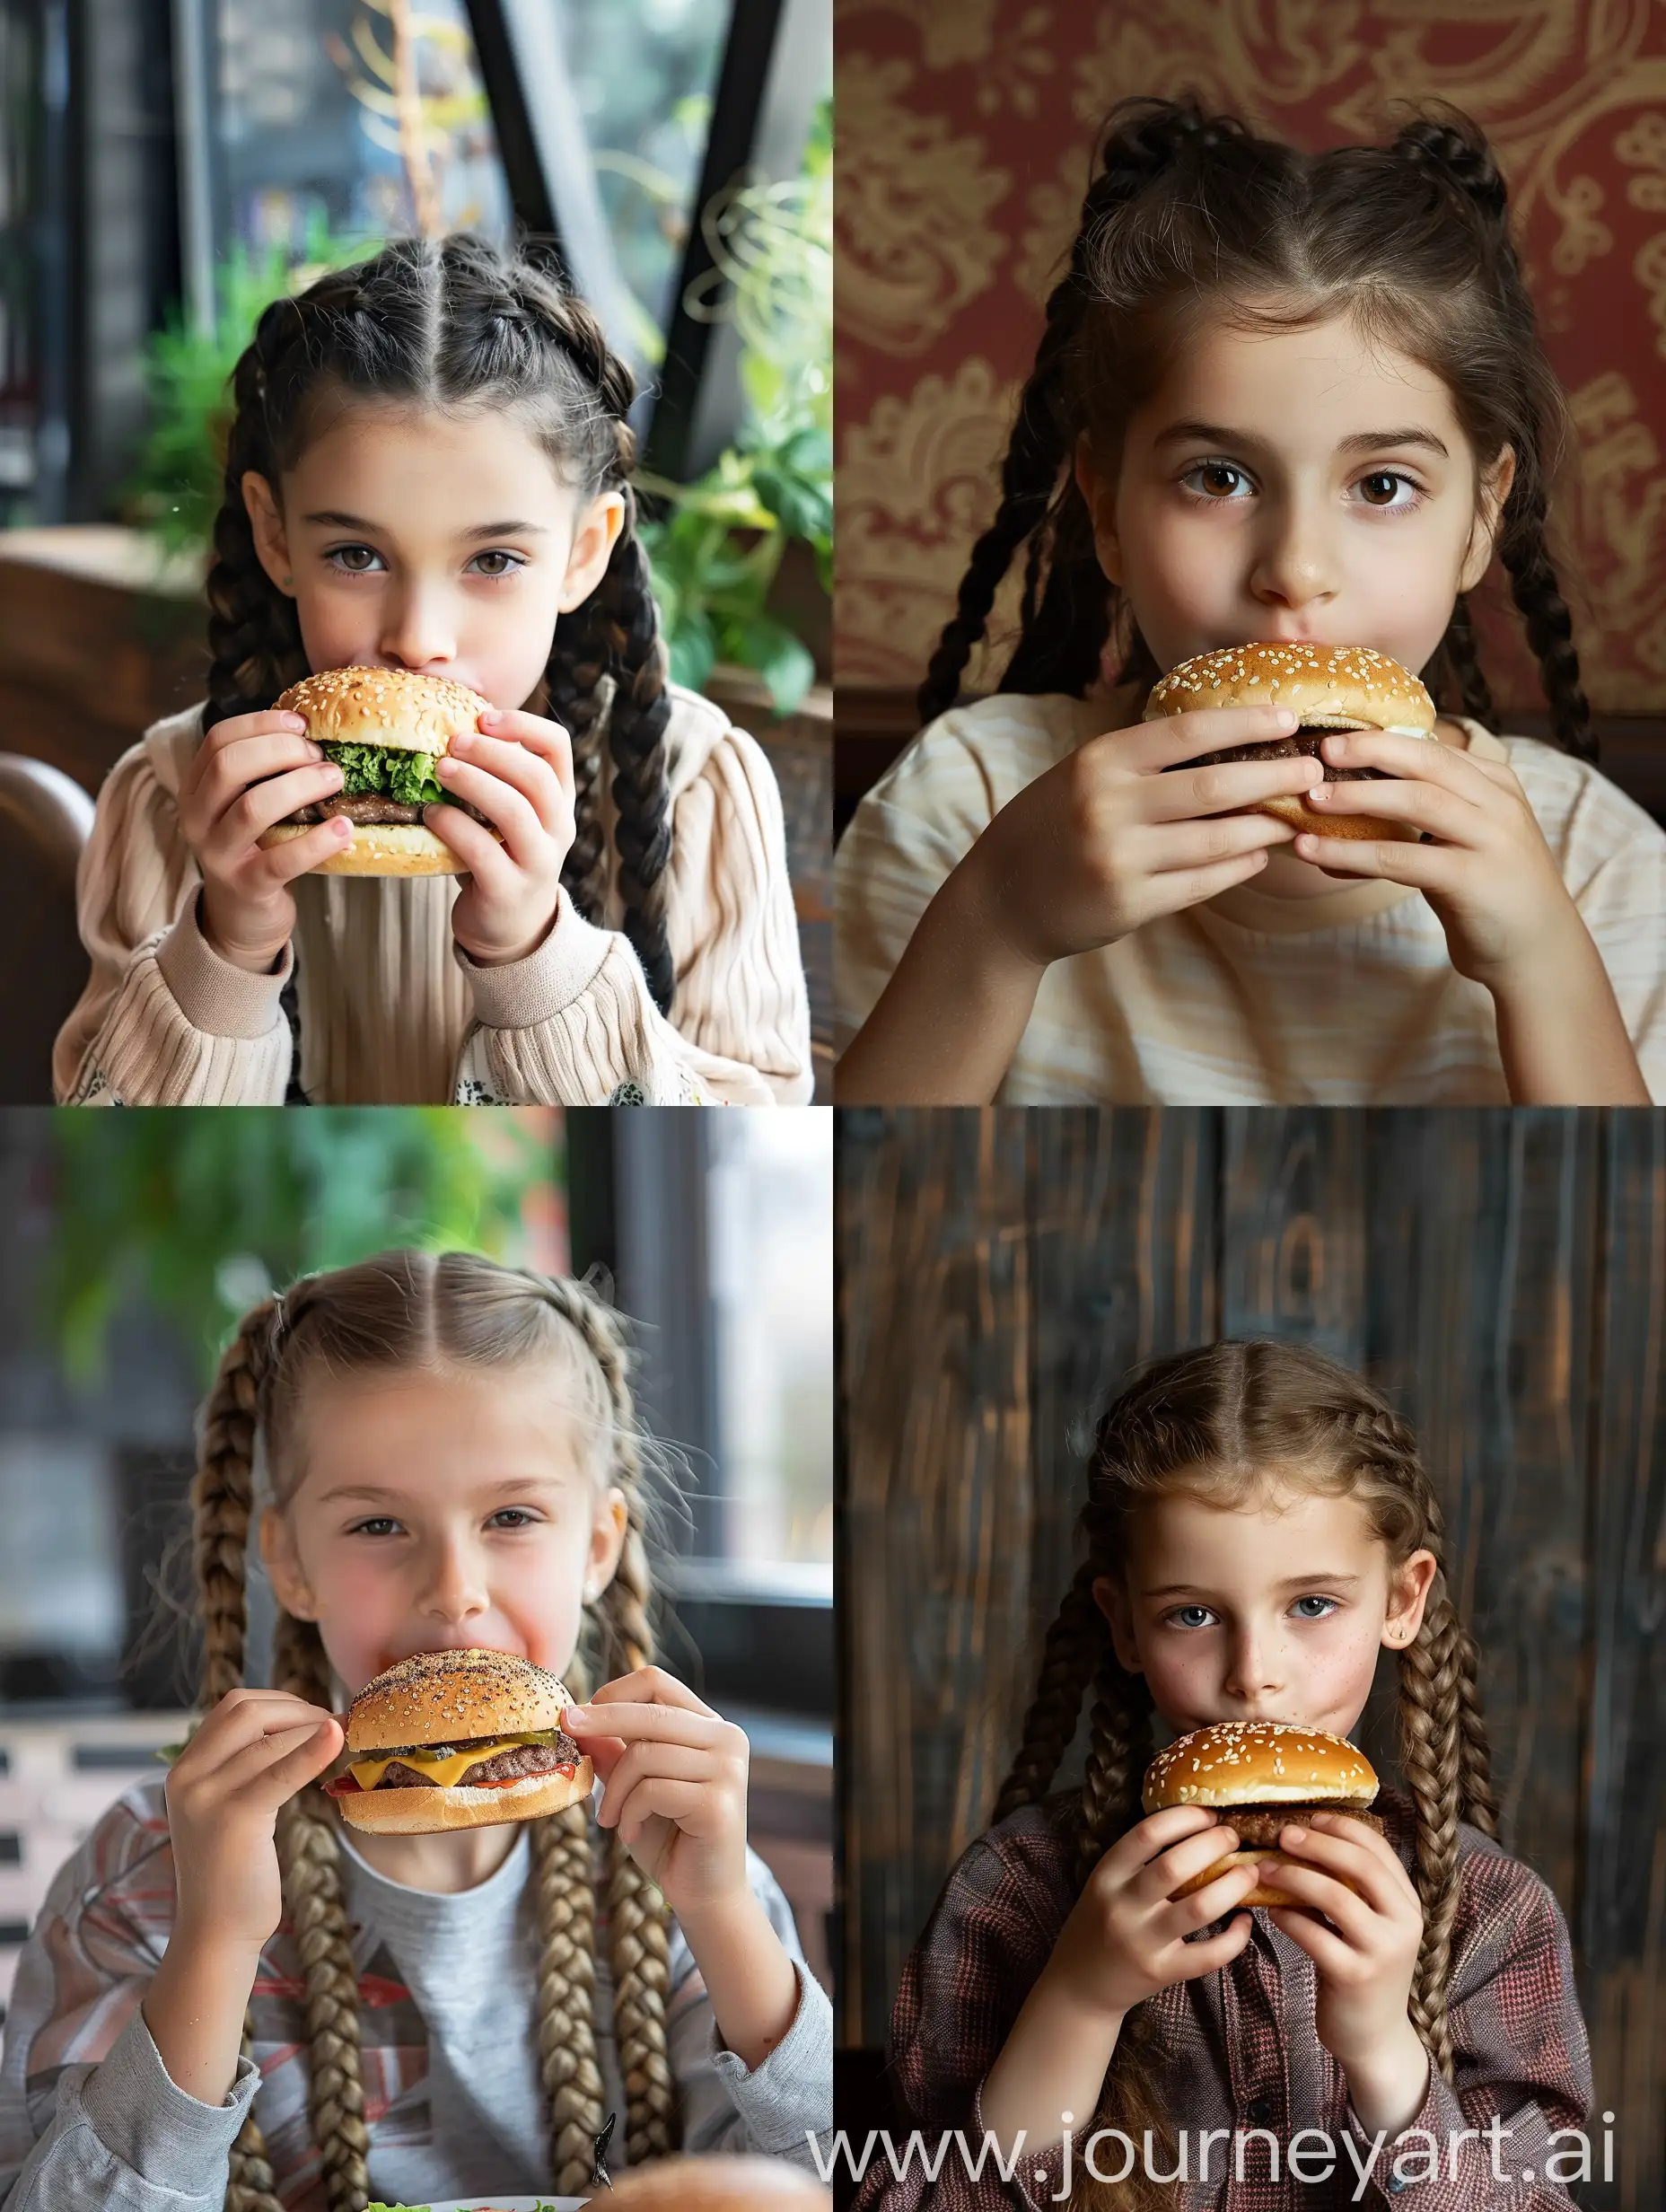 Young-Girl-Enjoying-Hamburger-Meal-with-Braided-Hair